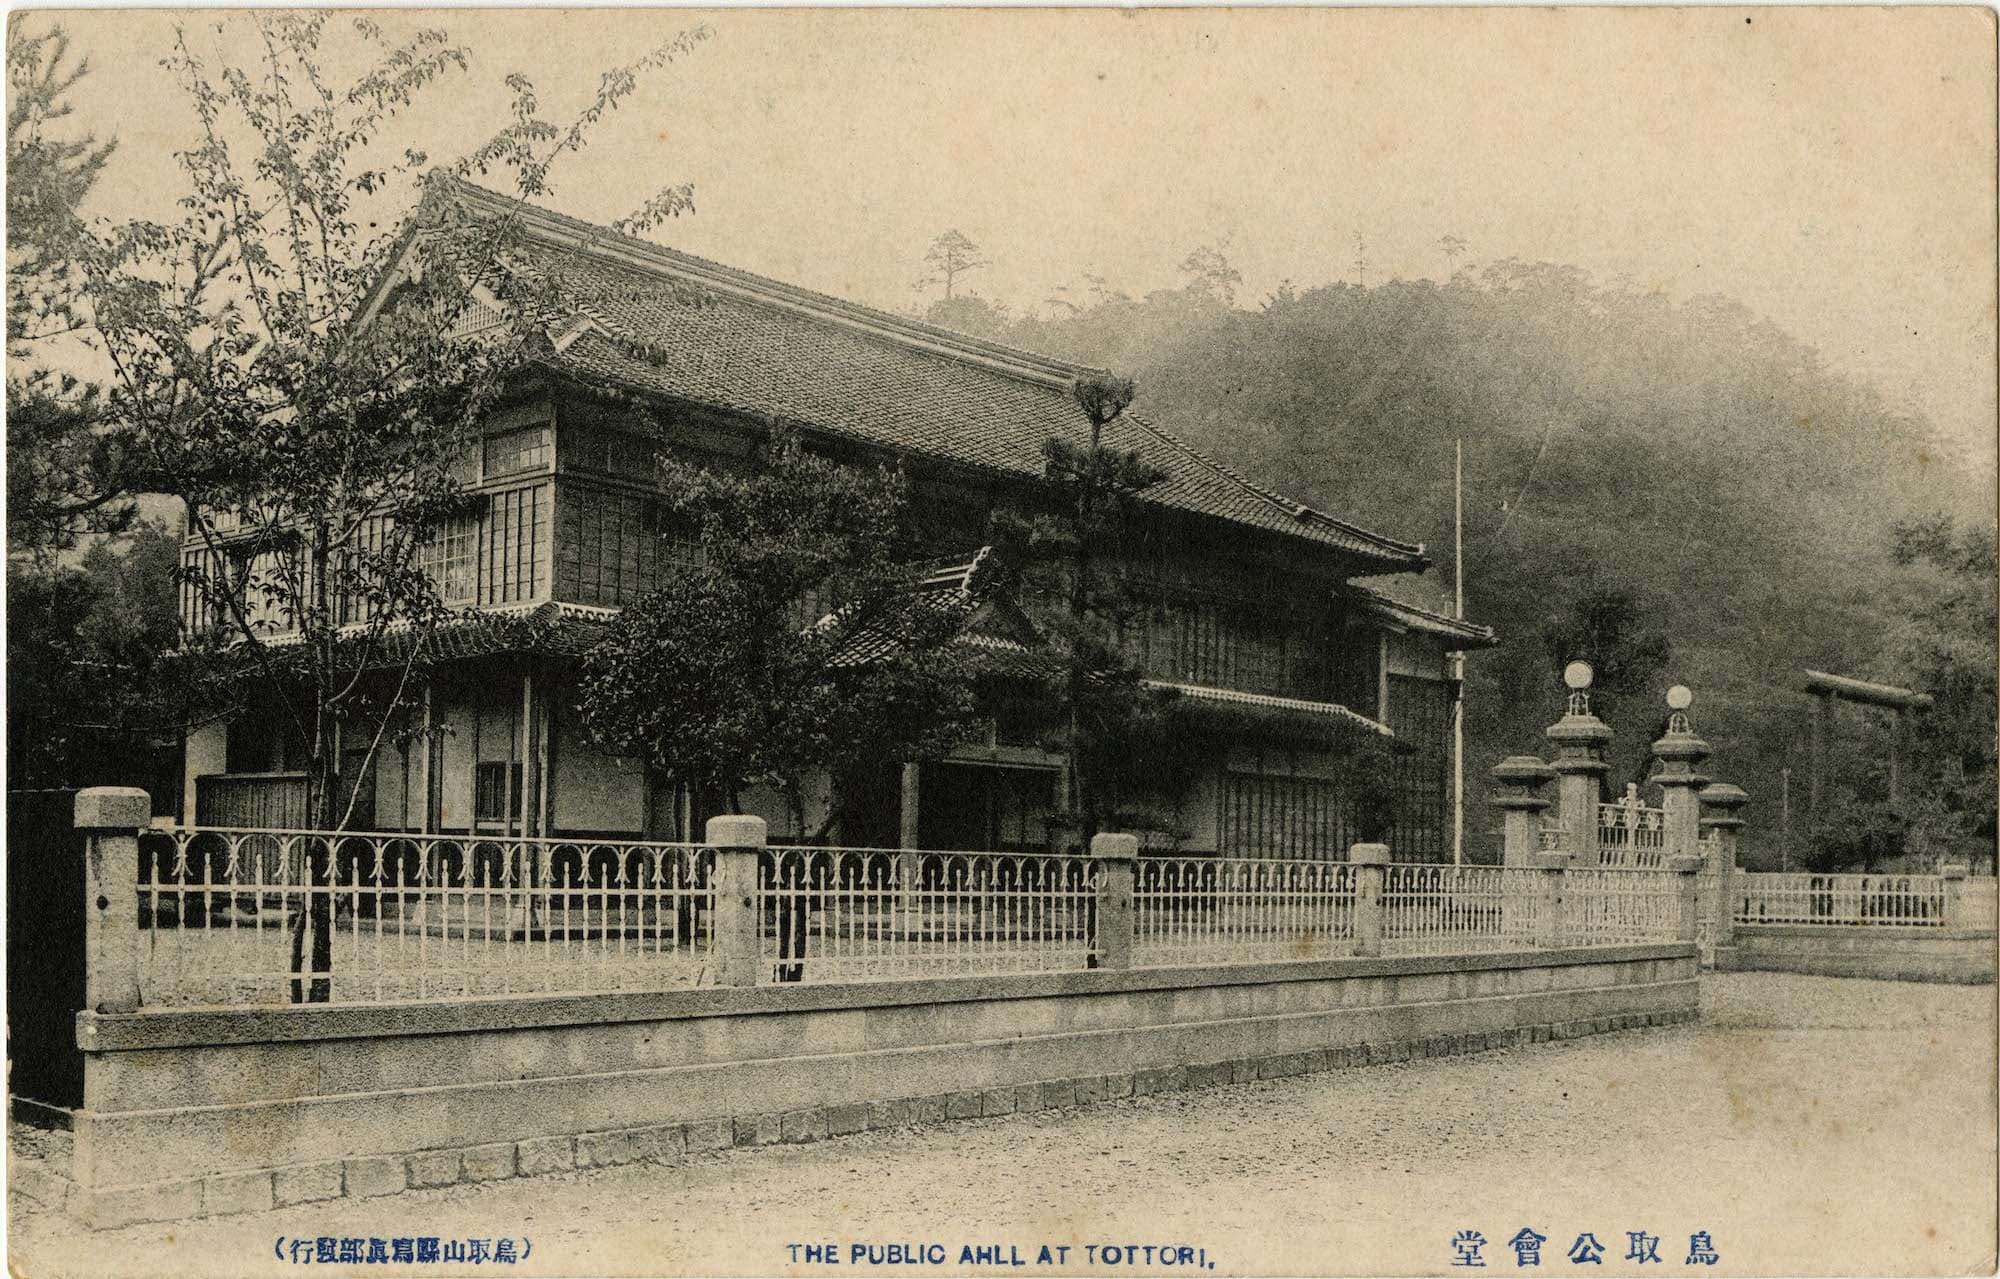 鳥取公会堂's image 1